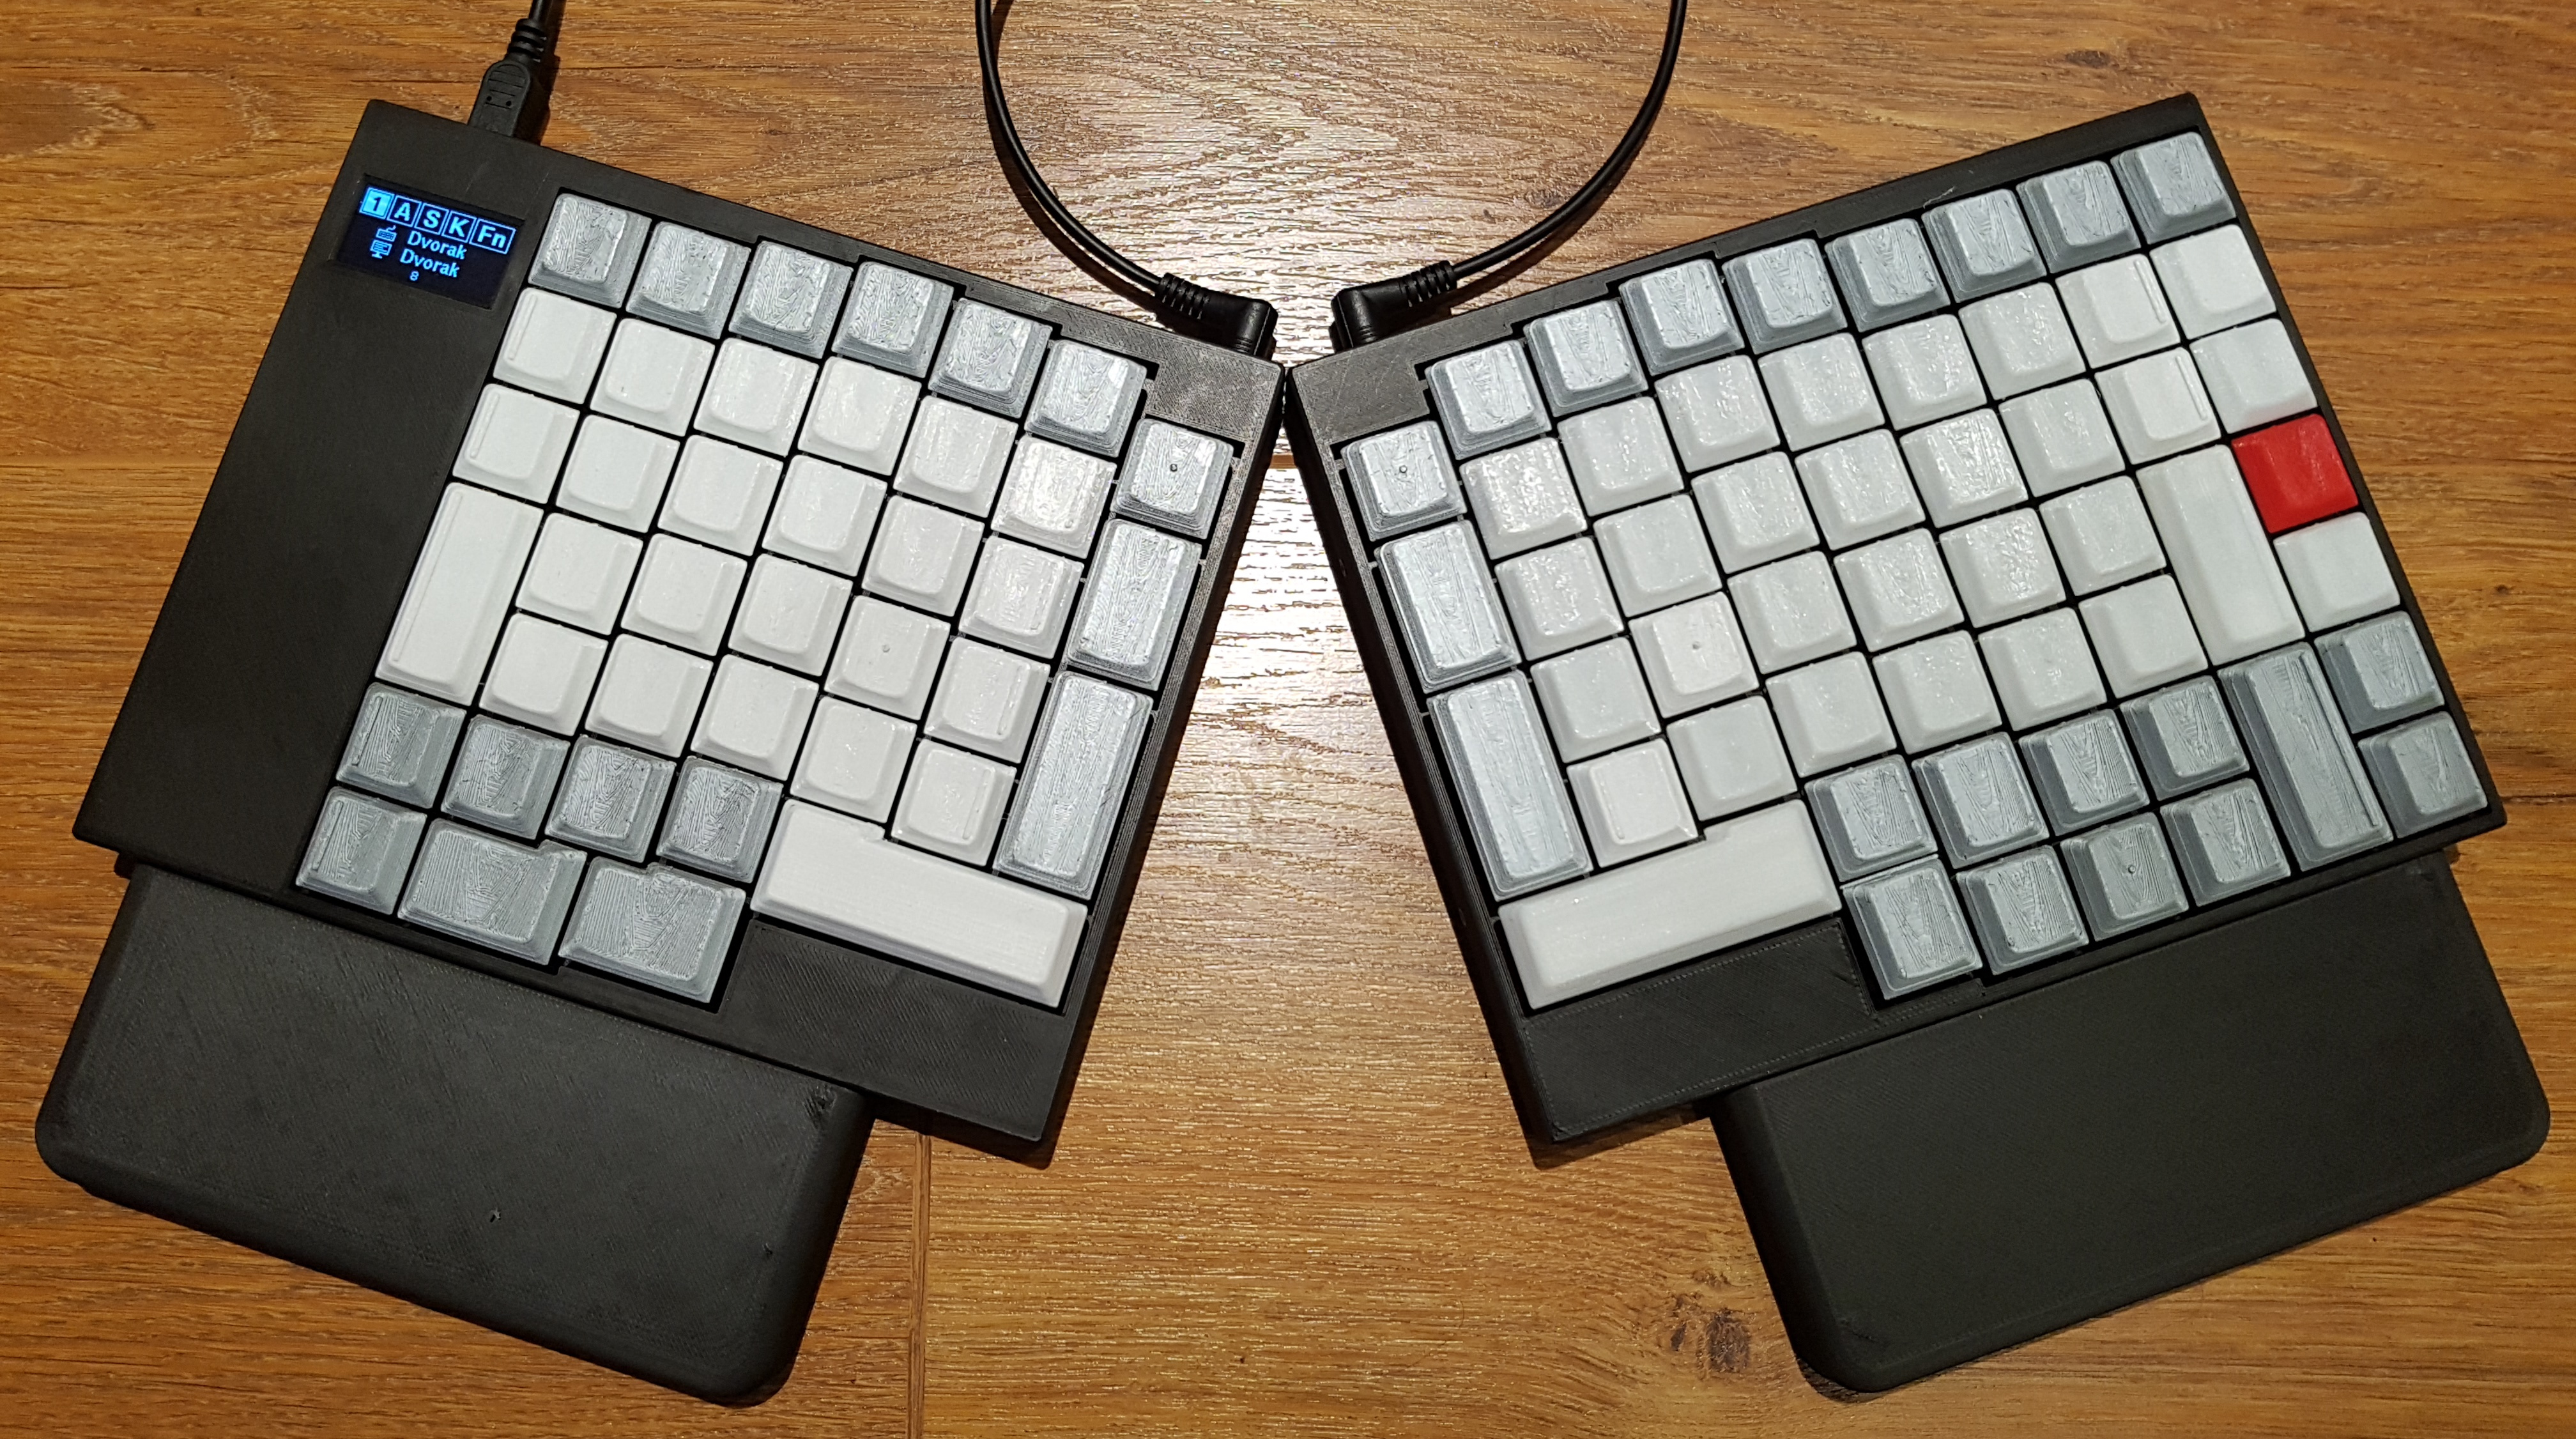 3D Printed Keyboard A fully 3D printed computer keyboard.